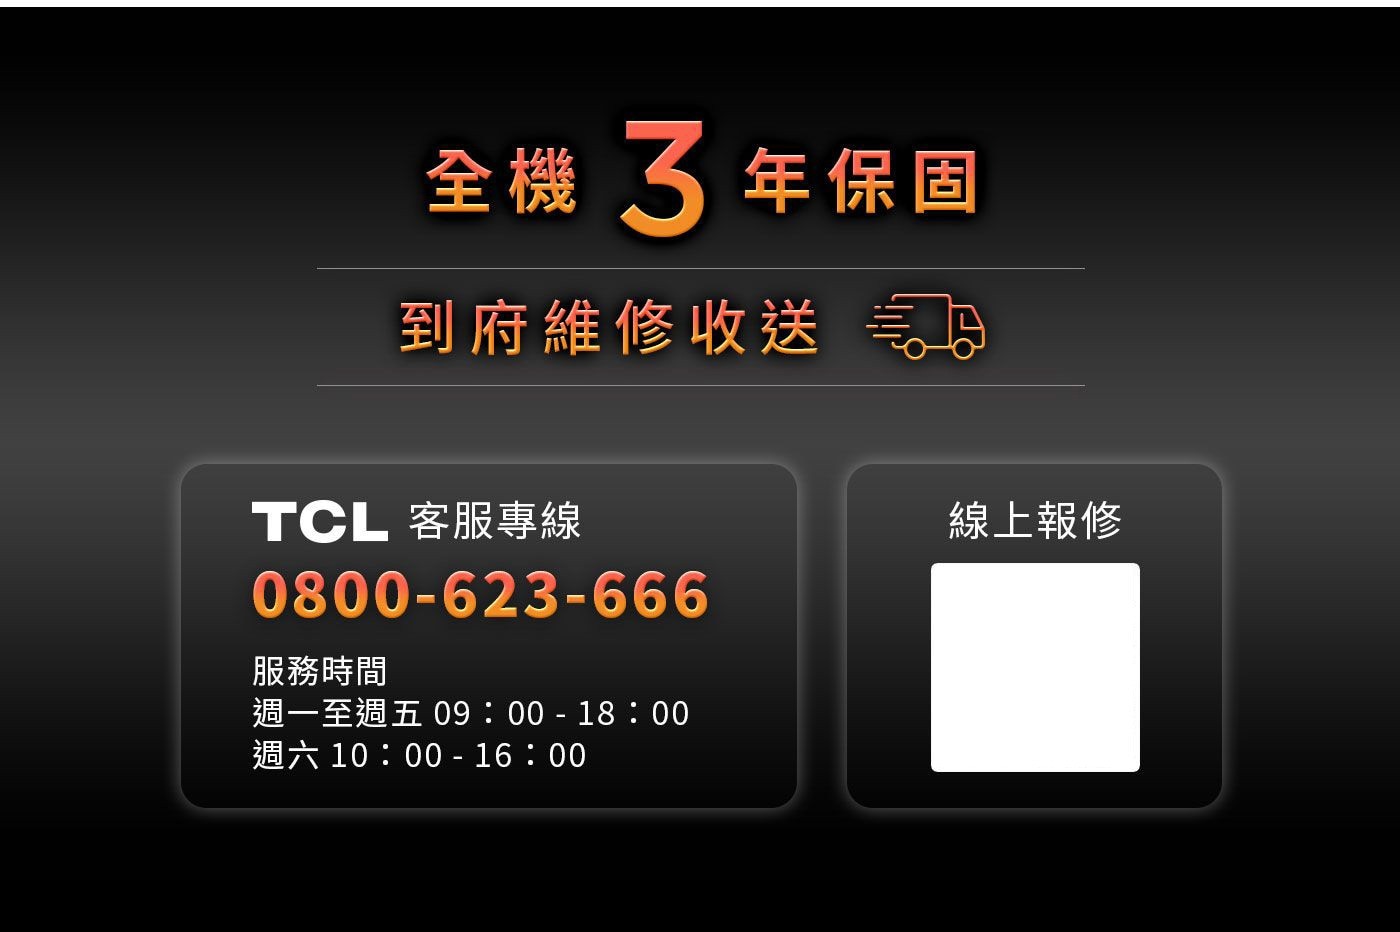 TCL 75吋 4K Mini LED QLED Google TV 量子智能連網液晶顯示器 75C845 Full Array Local Dimming量身打造每一幀影像